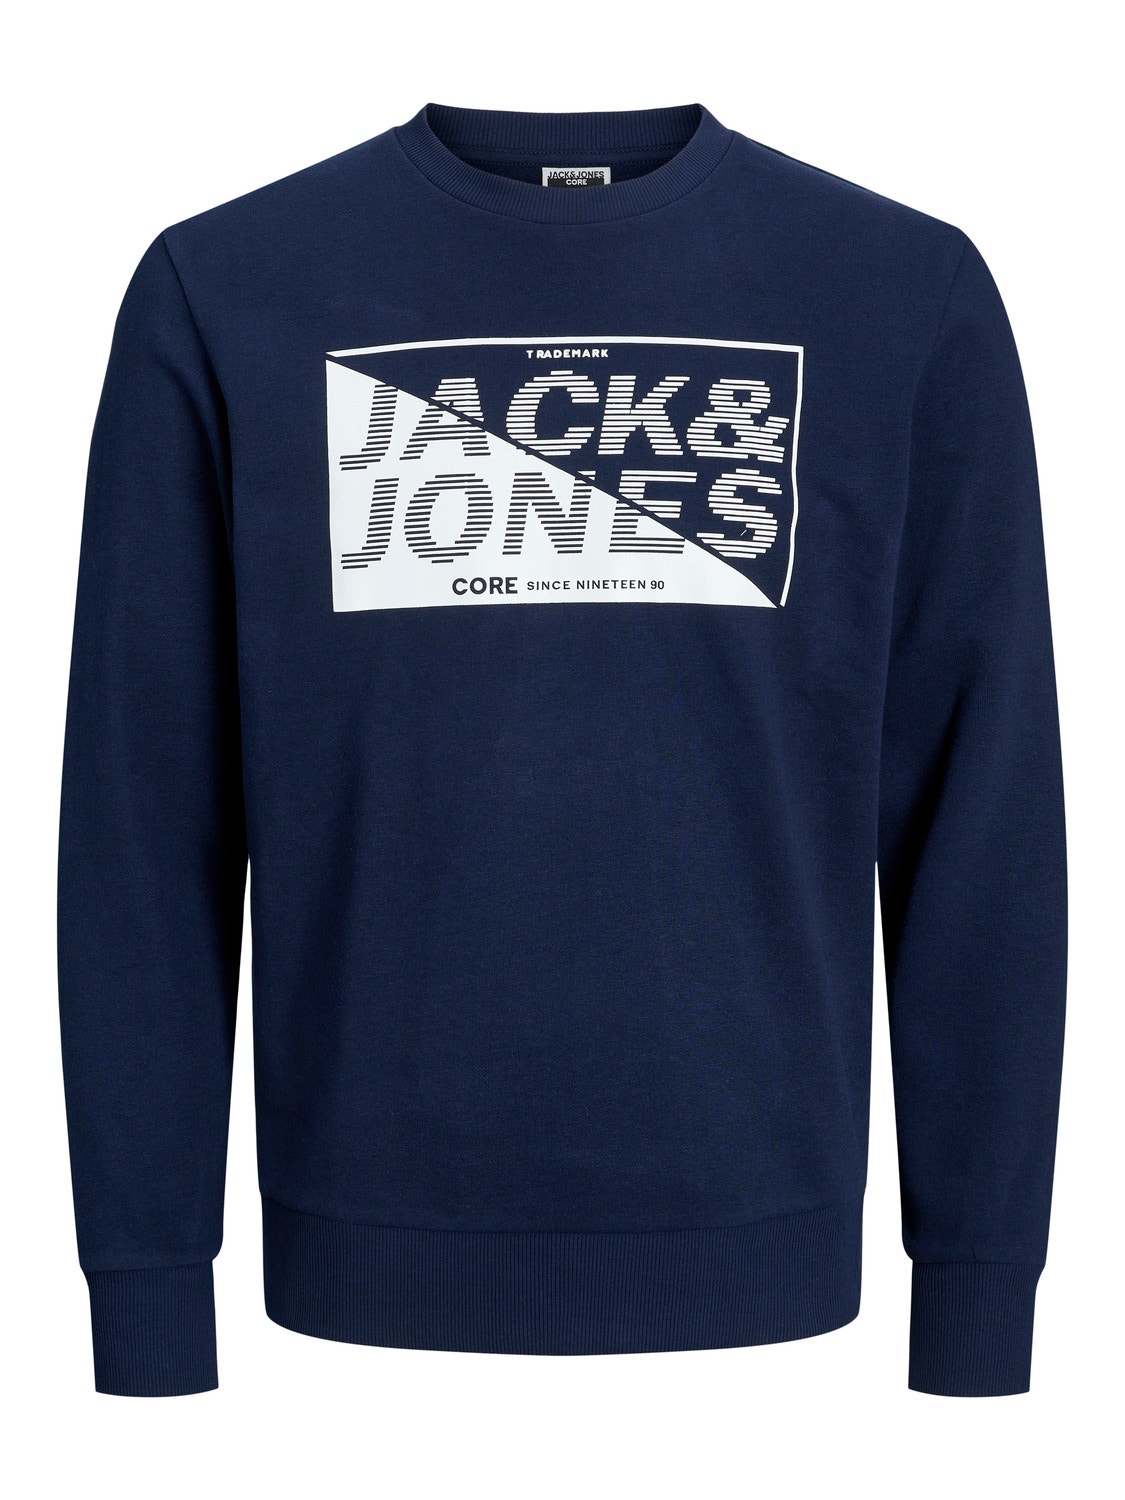 Jack & Jones Felpa Girocollo Con logo -Navy Blazer - 12243922